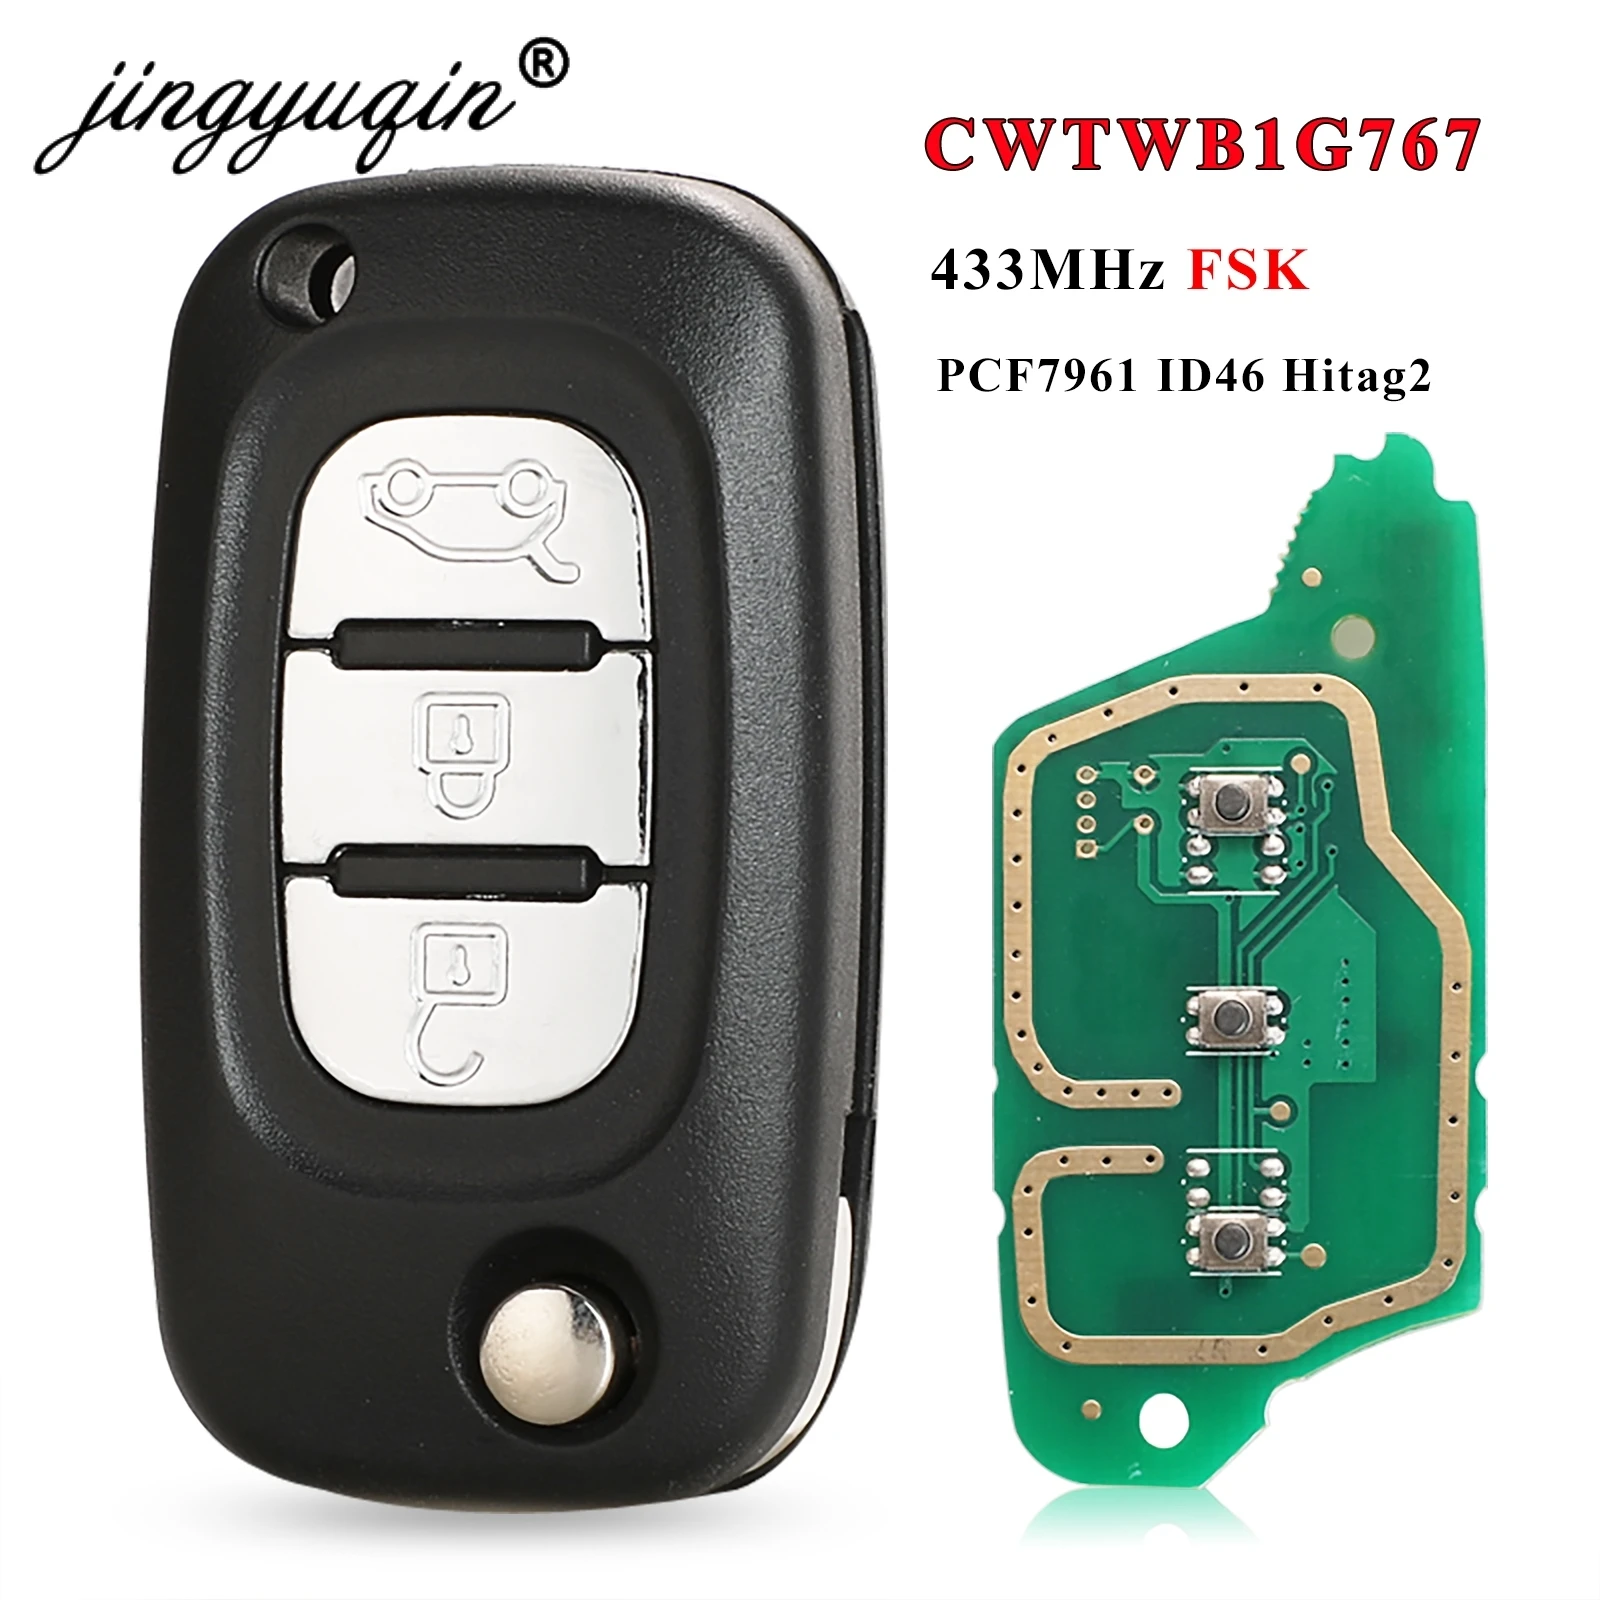 jingyuqin 433MHz ID46 pcf7961 3BTN Car Remote Key for Renault Scenic III Megane III Fluence 2009-2015 Master Kangoo CWTWB1G767